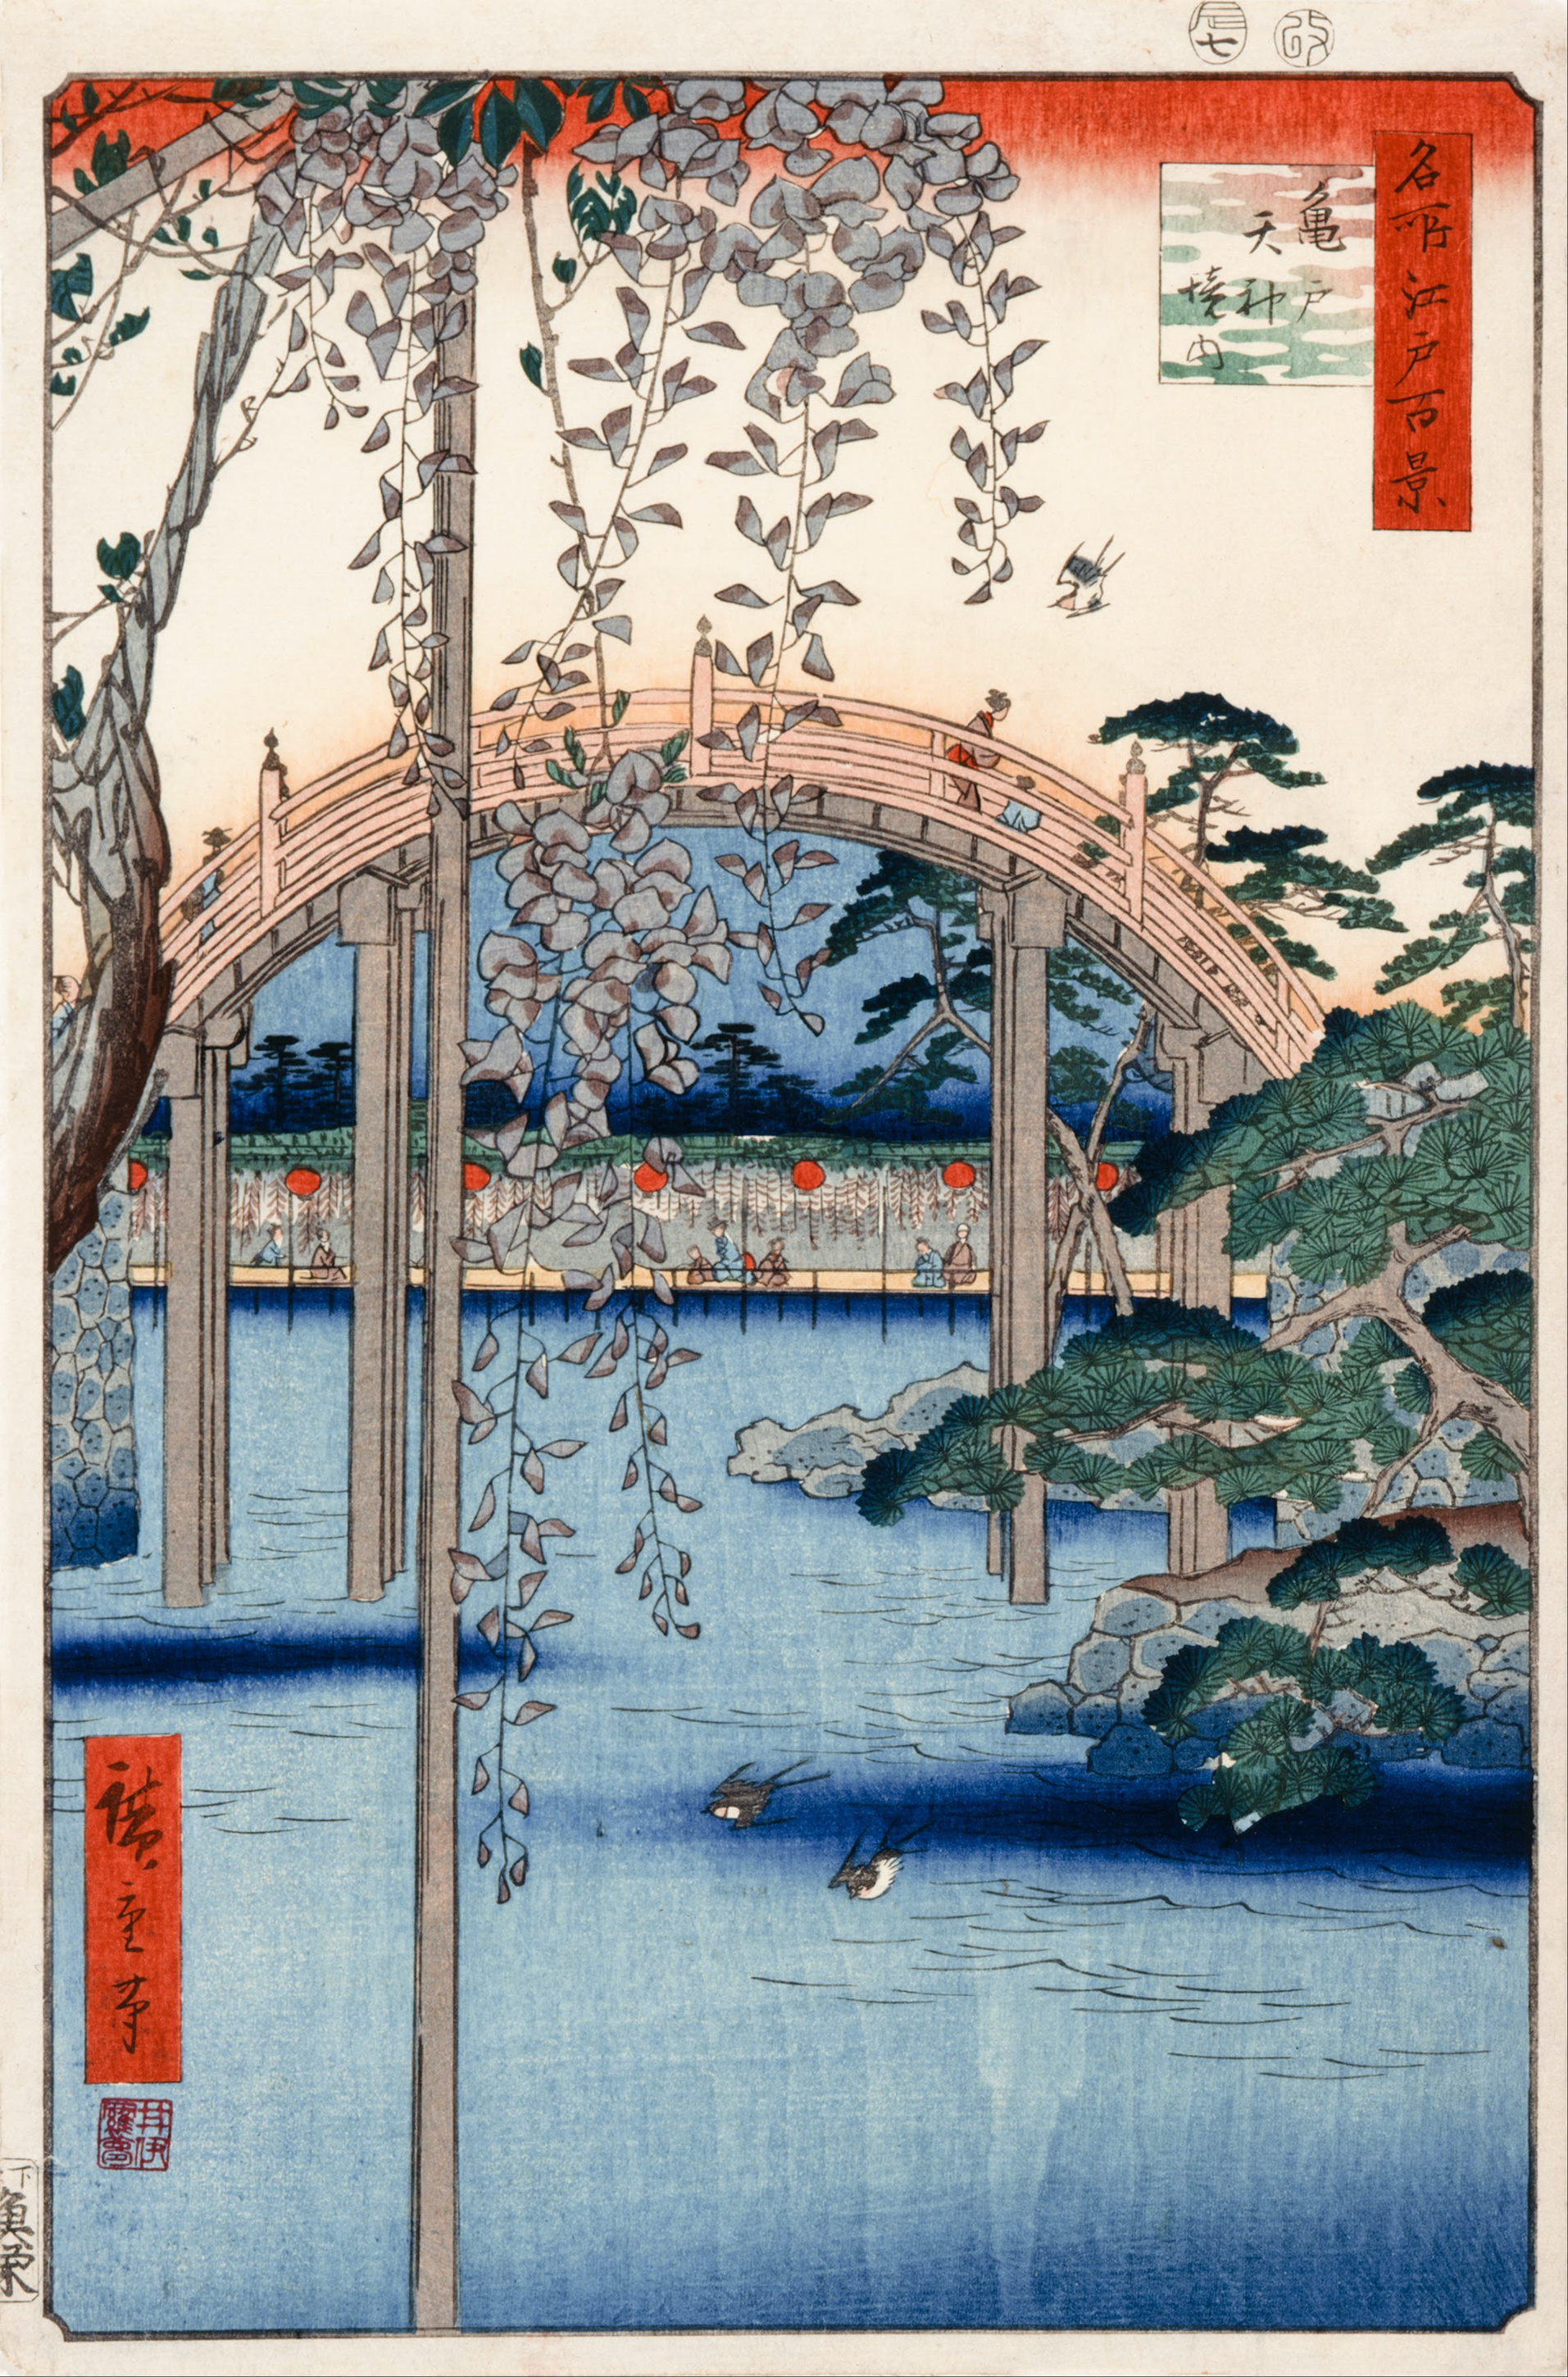 No. 57, Kameido Tenjin Tapınağı by  Hiroshige - 1856 - 34 x 22,9 cm 